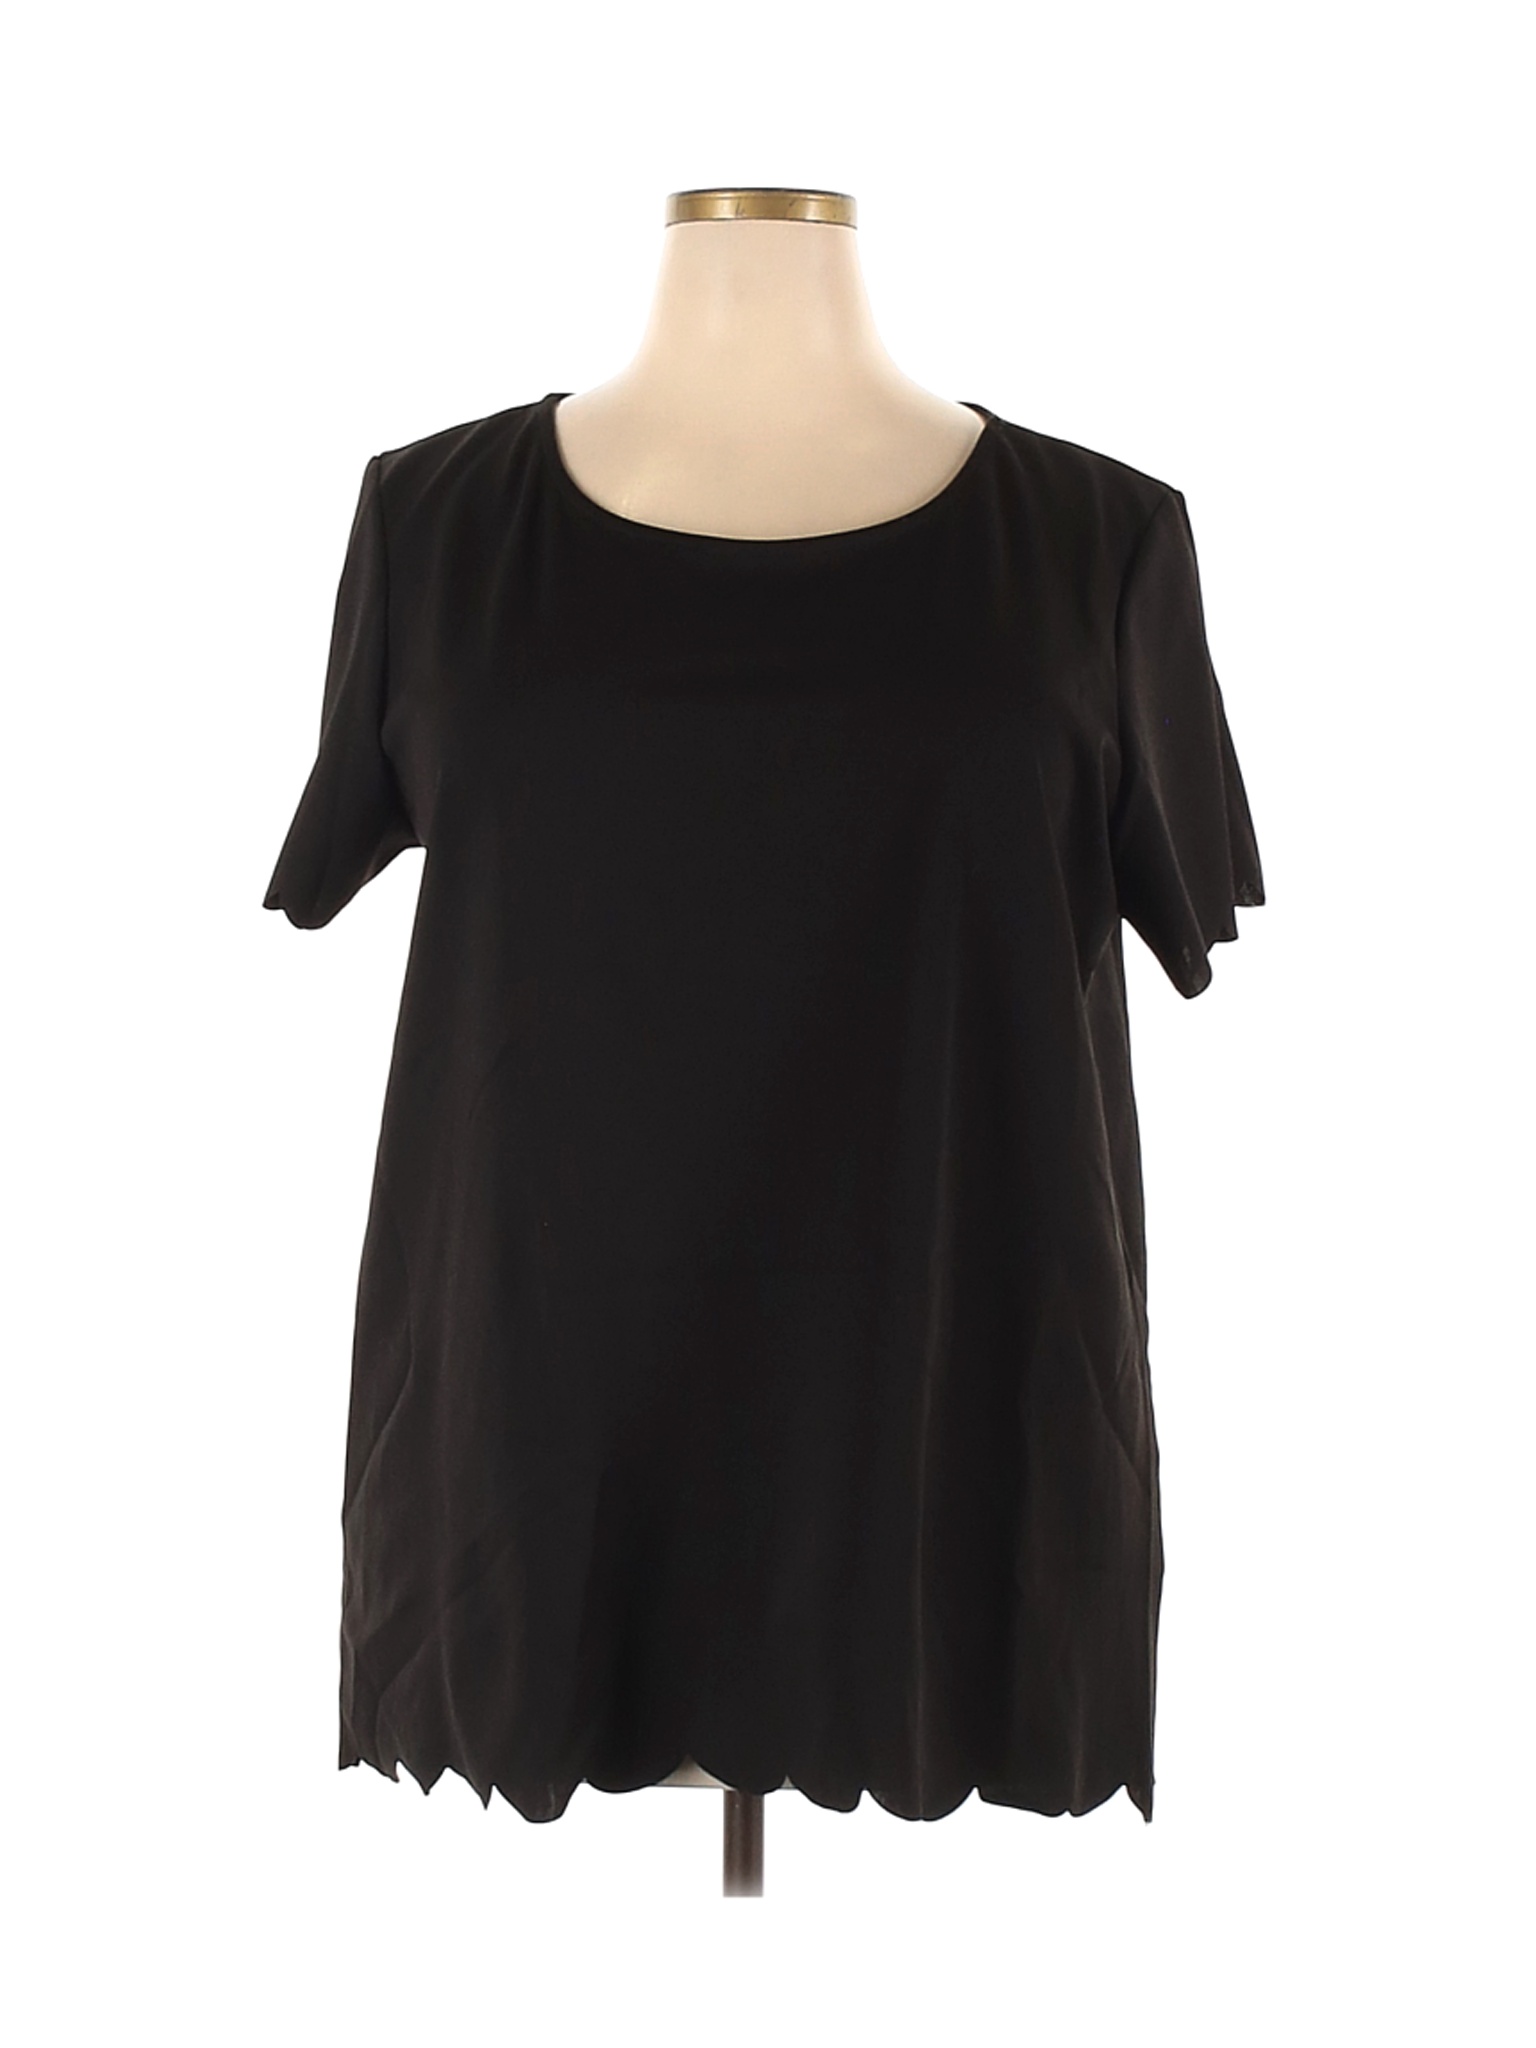 Jodifl Women Black Short Sleeve Blouse 2X Plus | eBay